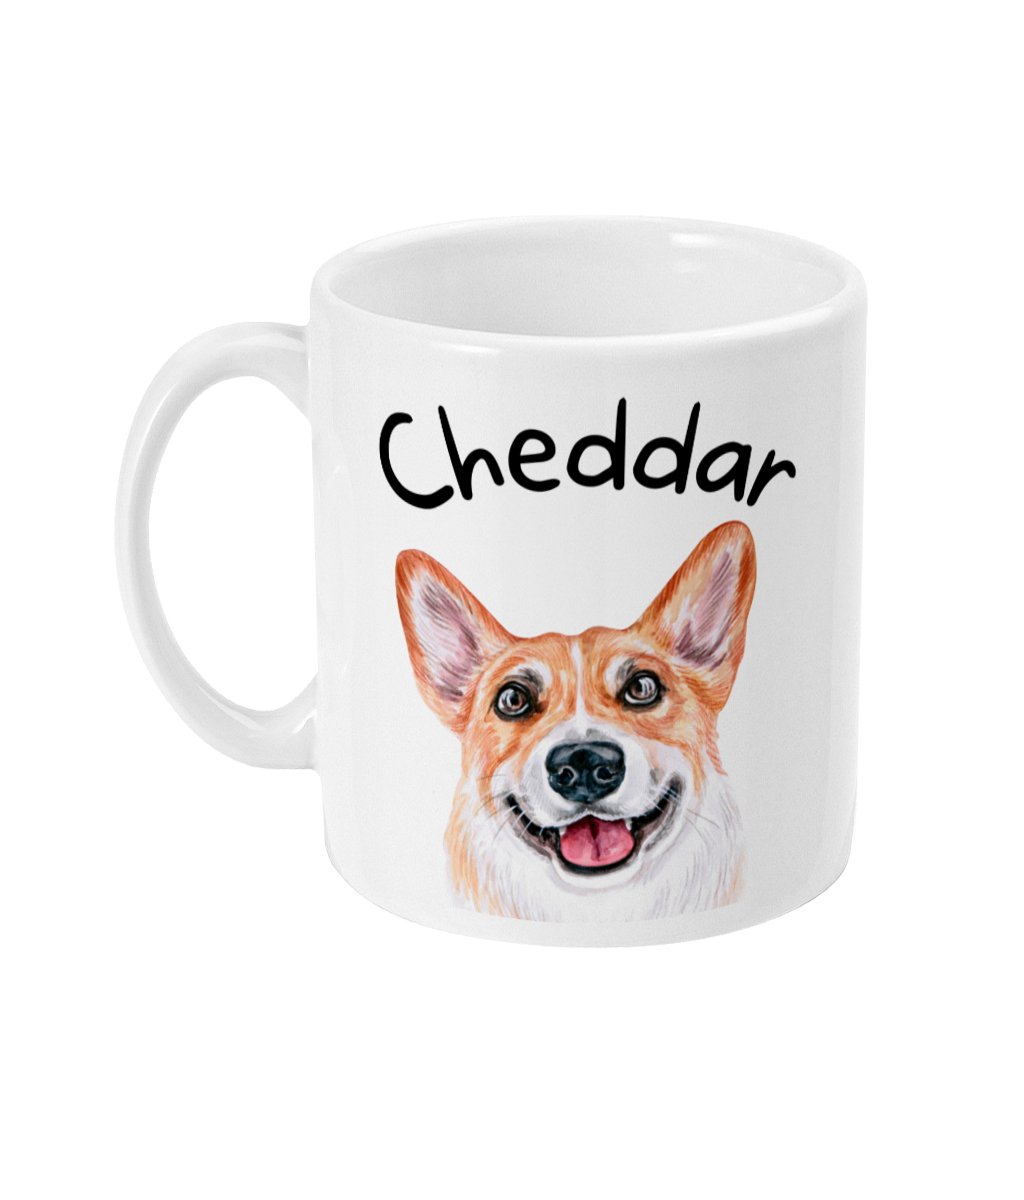 Personalised Dog Name Ceramic Mug 11oz - Sweetie